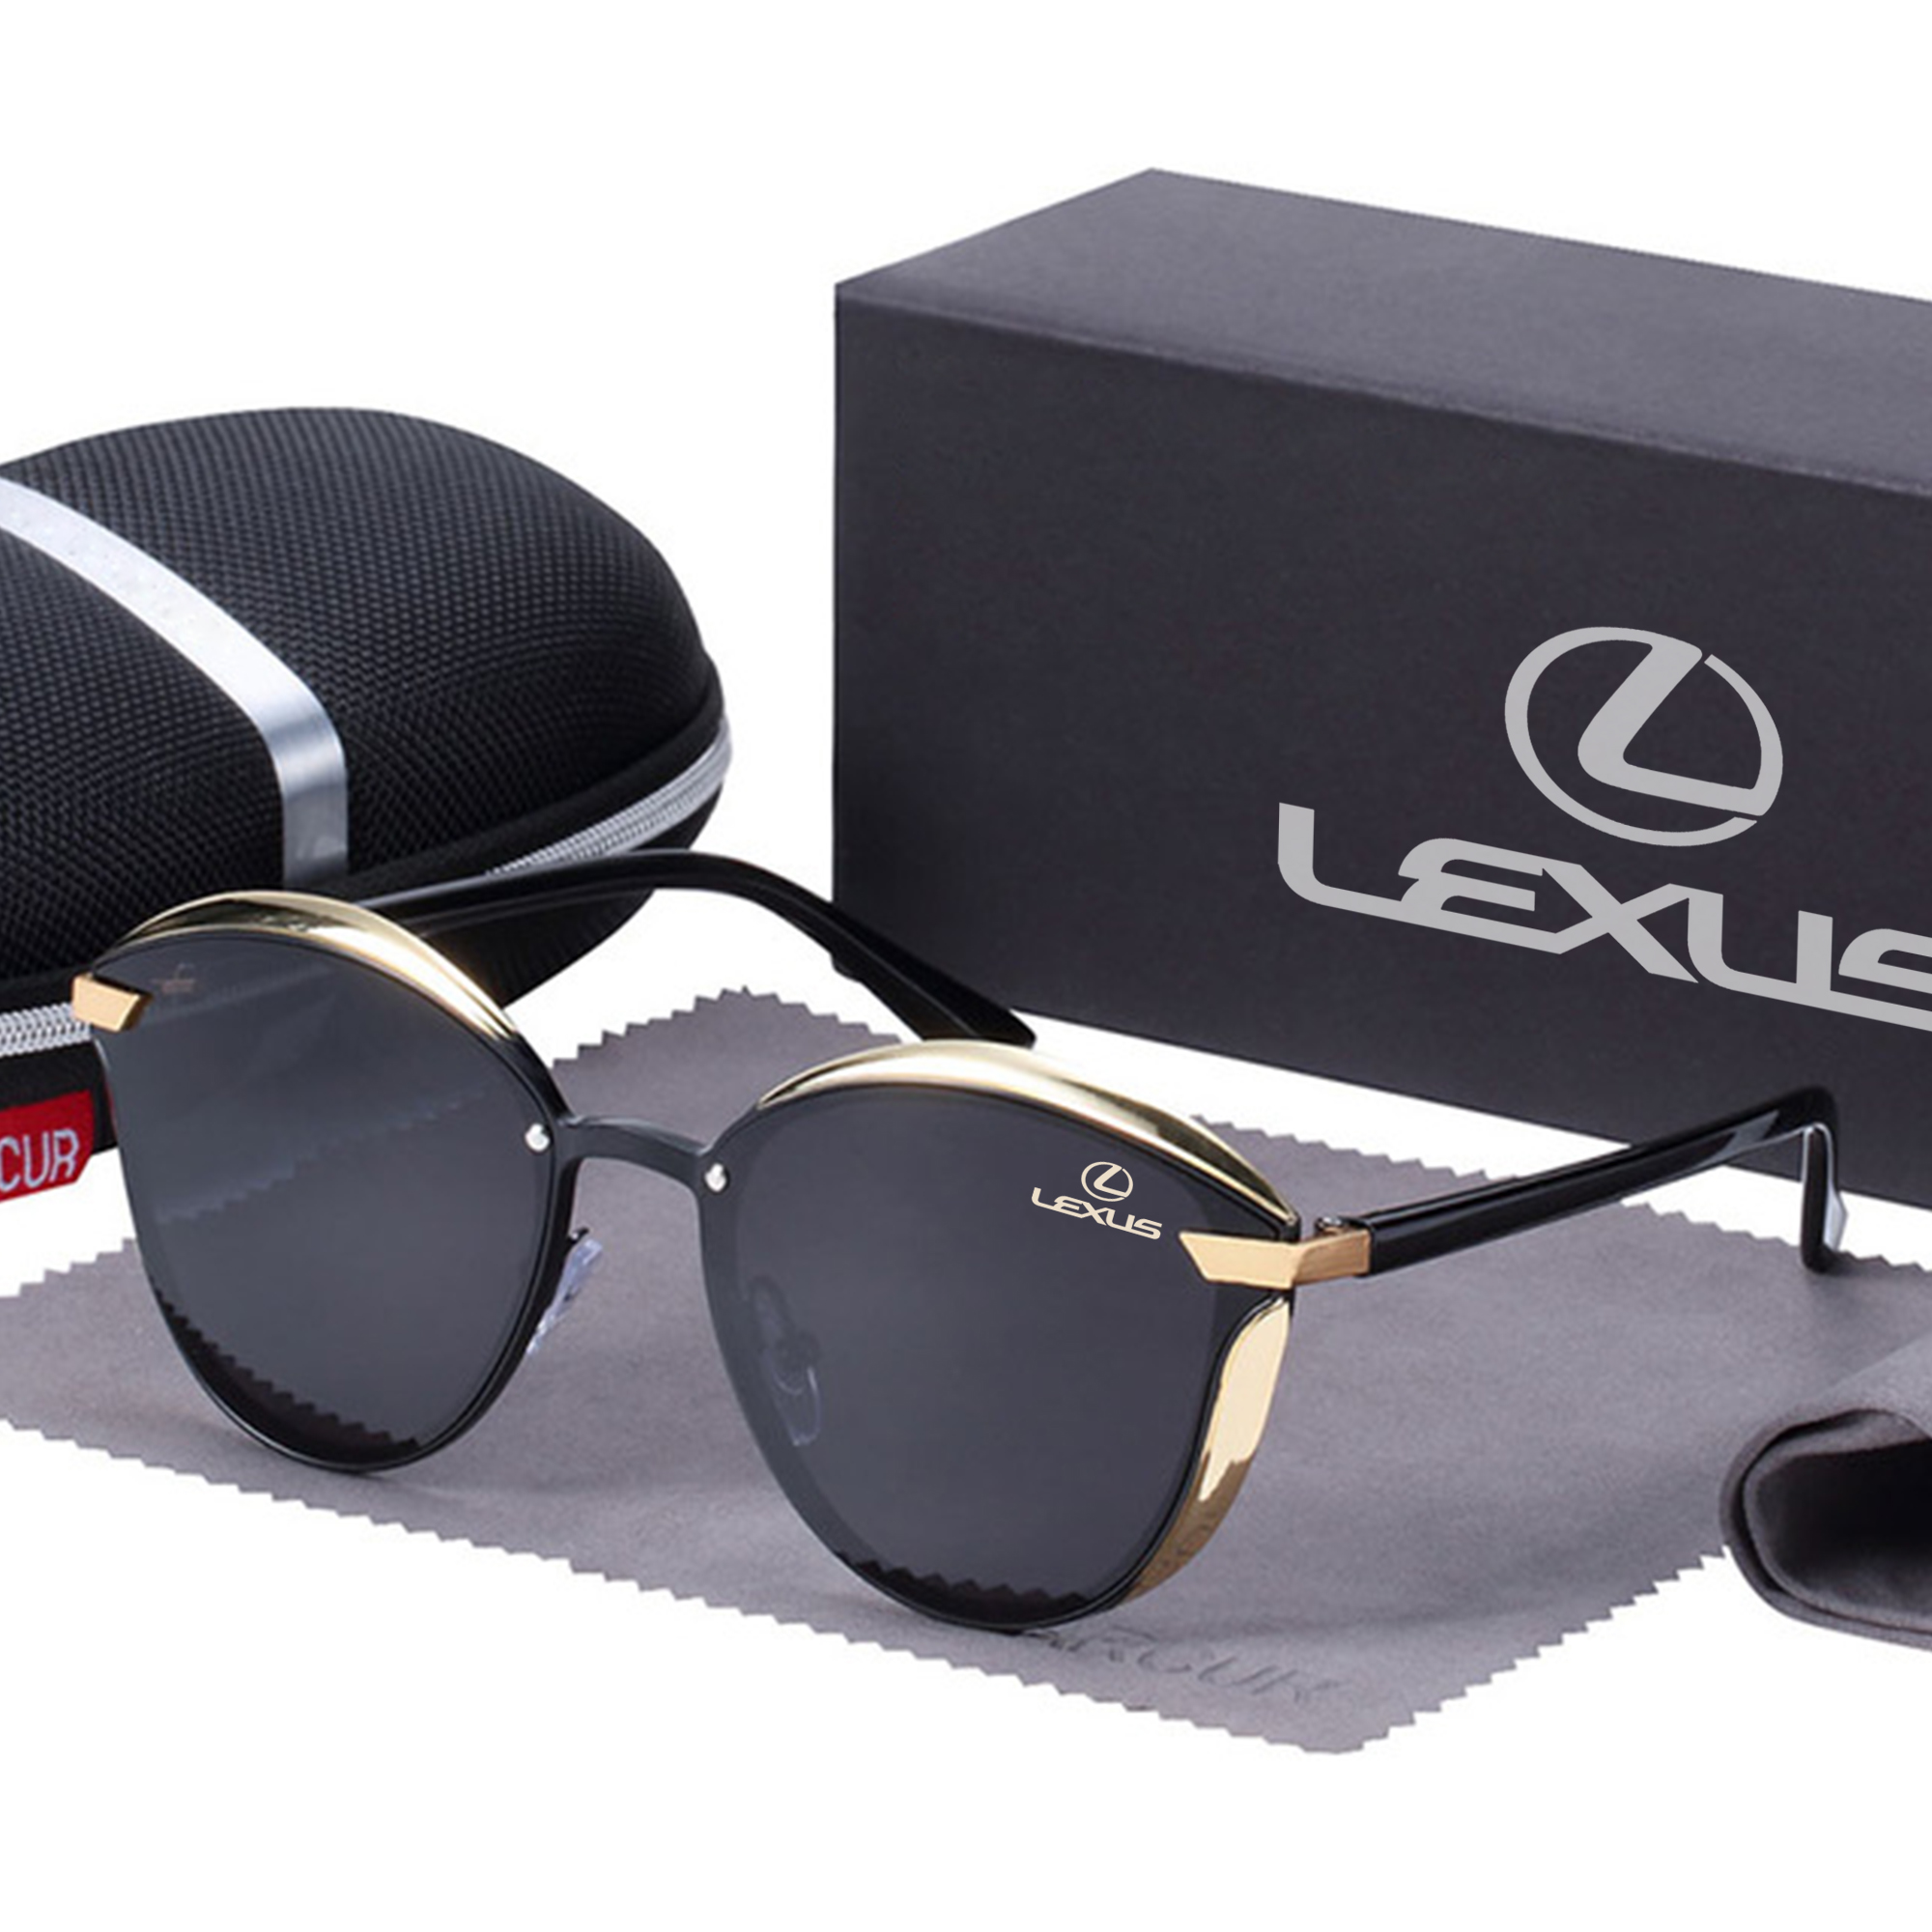 Mercedes Benz MBS06090101/DIAMONDS 3 BLACK leather bag – LUXOFORCE